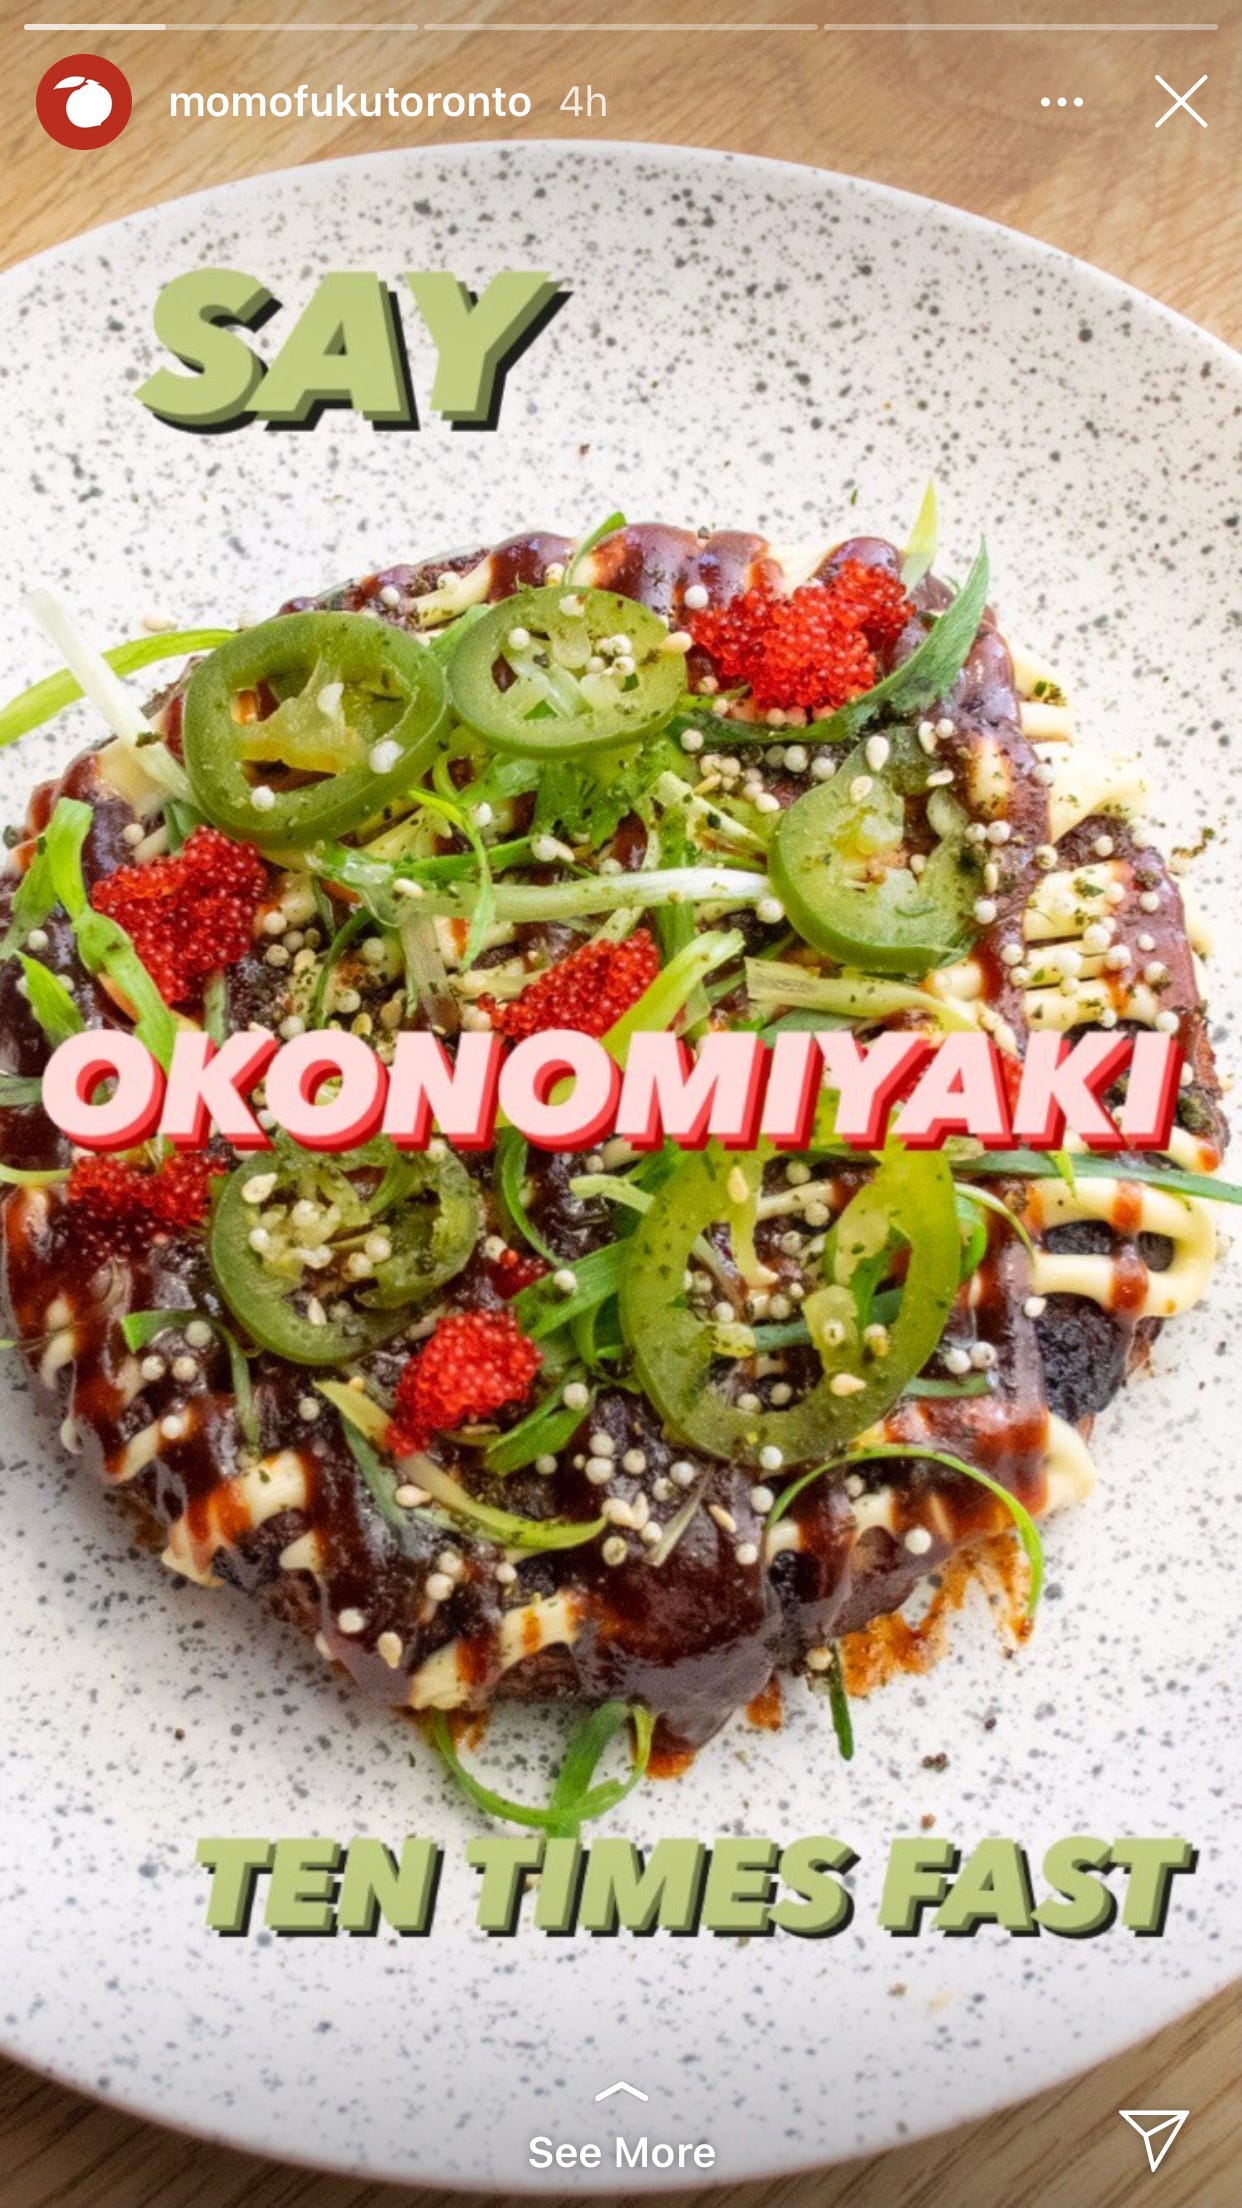  Screenshot of an Instagram story from Momofuku Toronto that reads, “Say okonomiyaki ten times fast”.